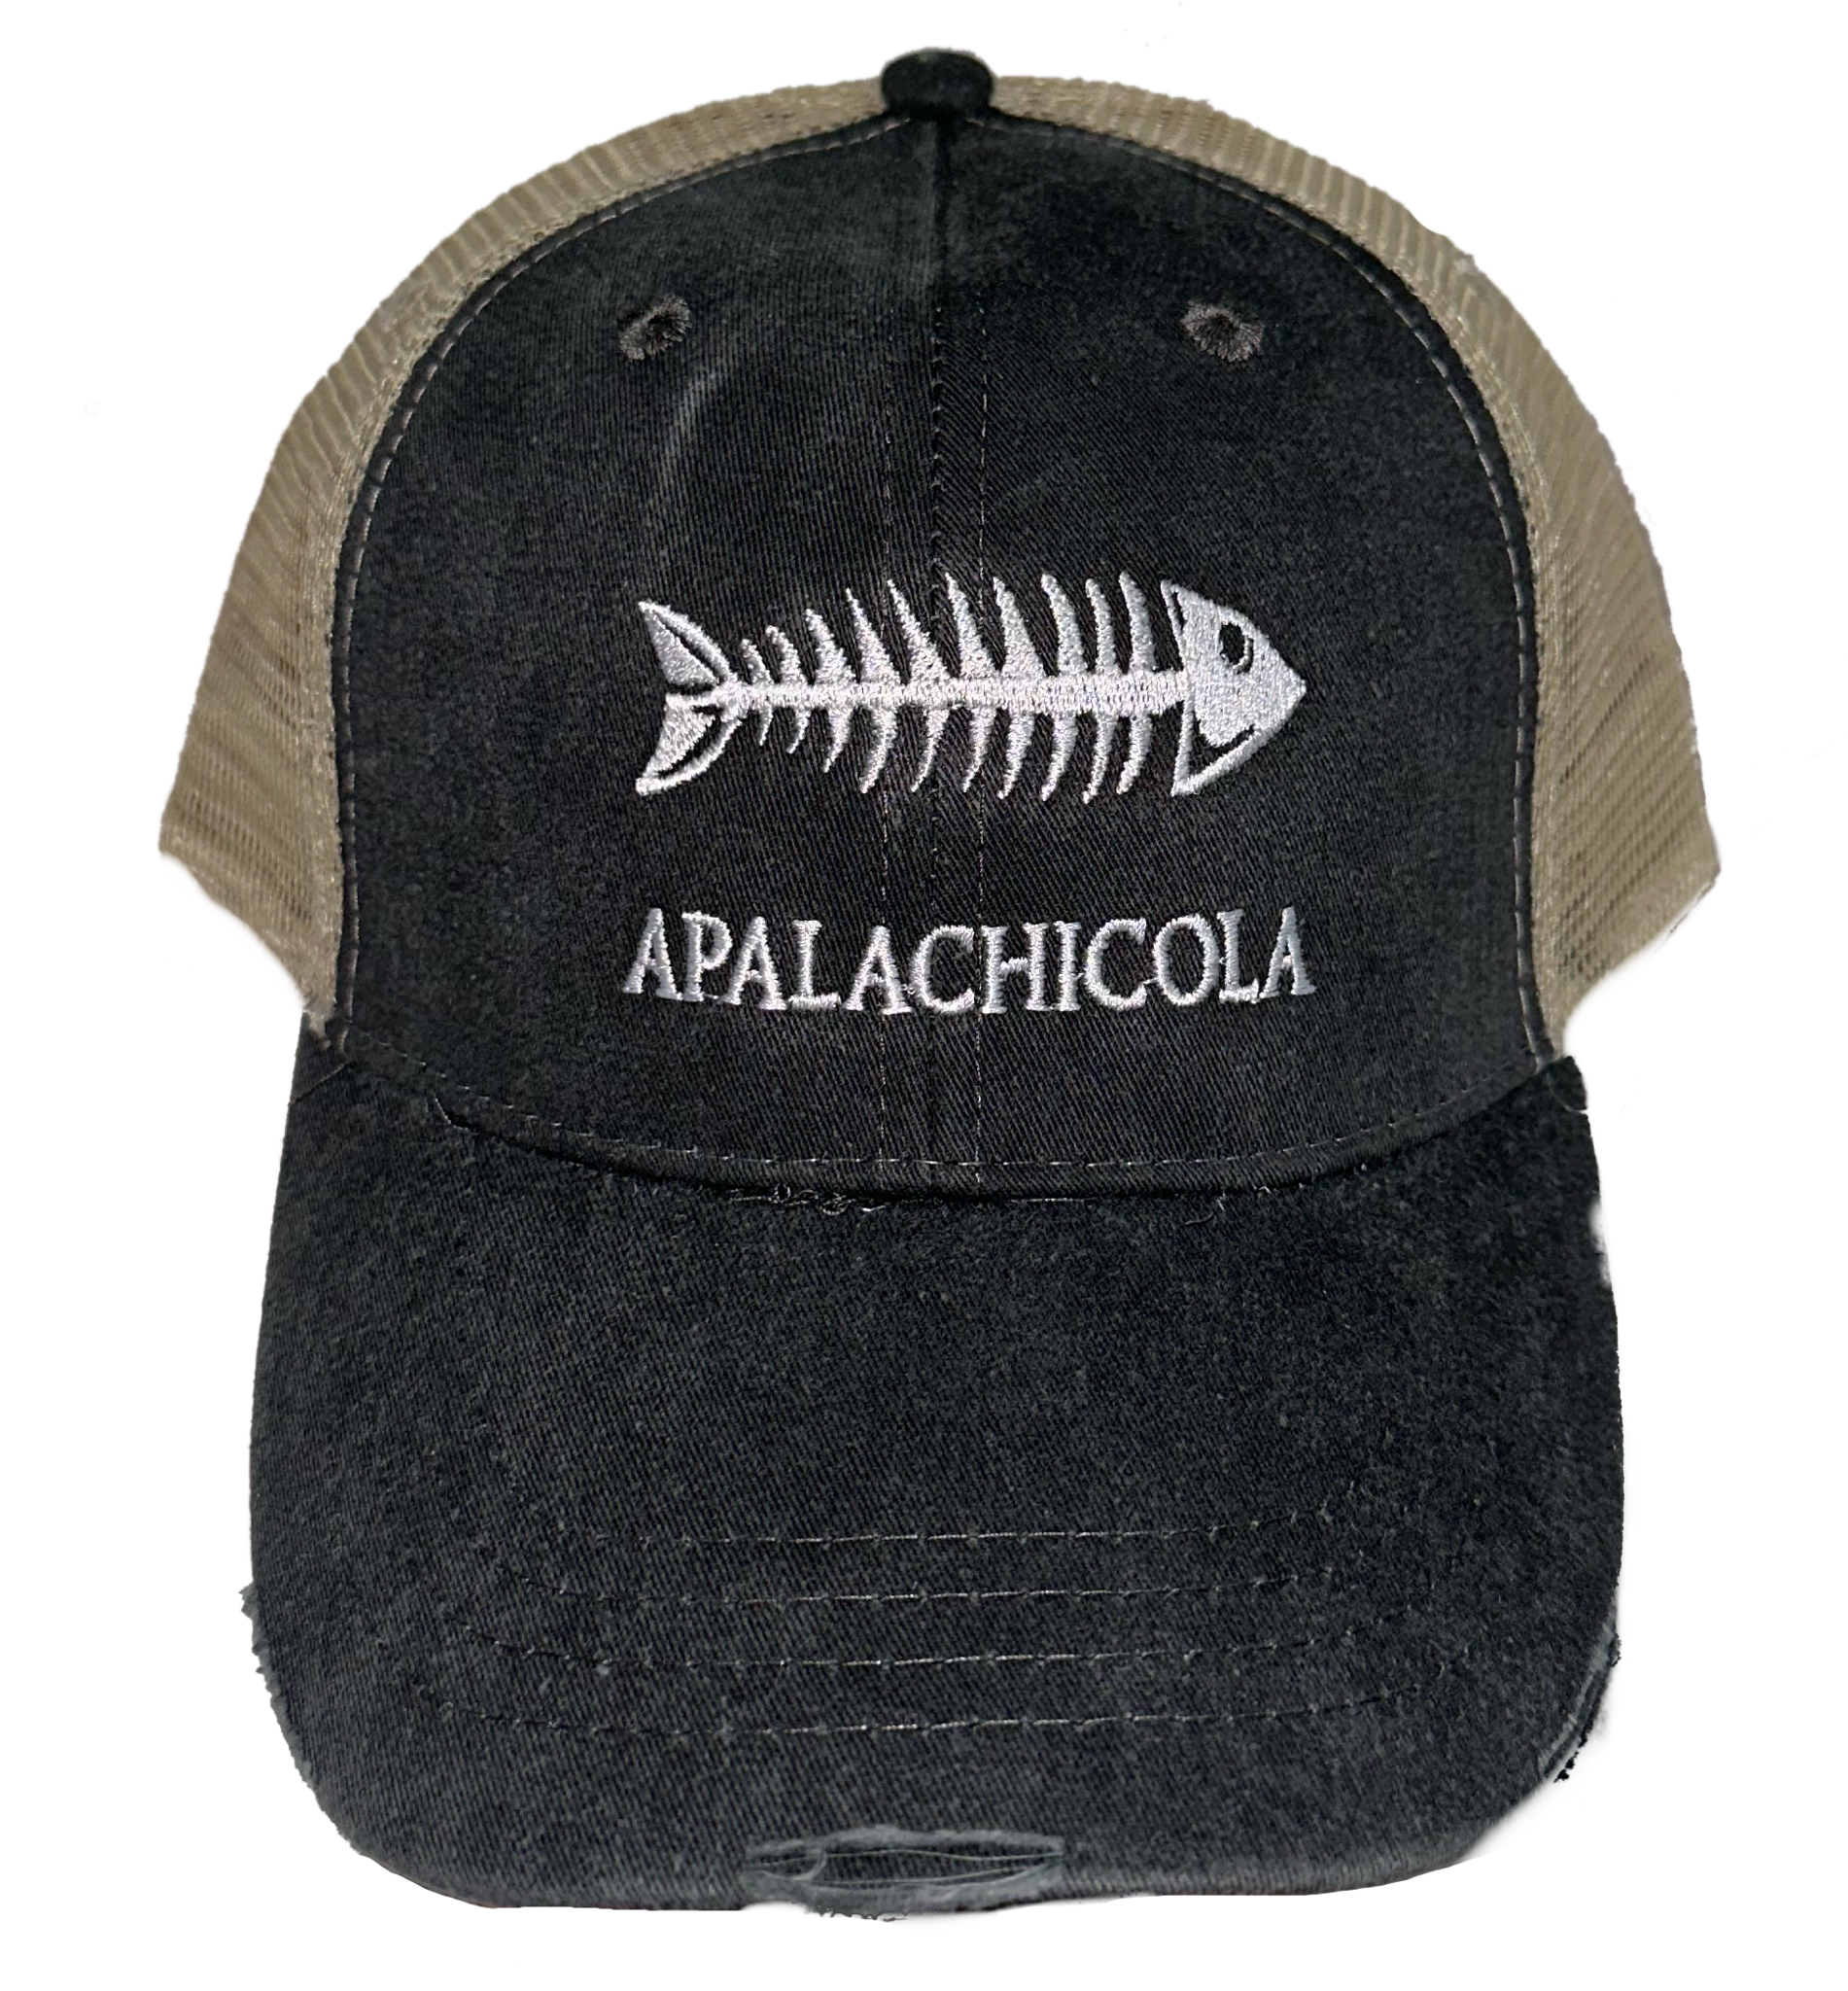 Homestead Fishbone Meshback Cap